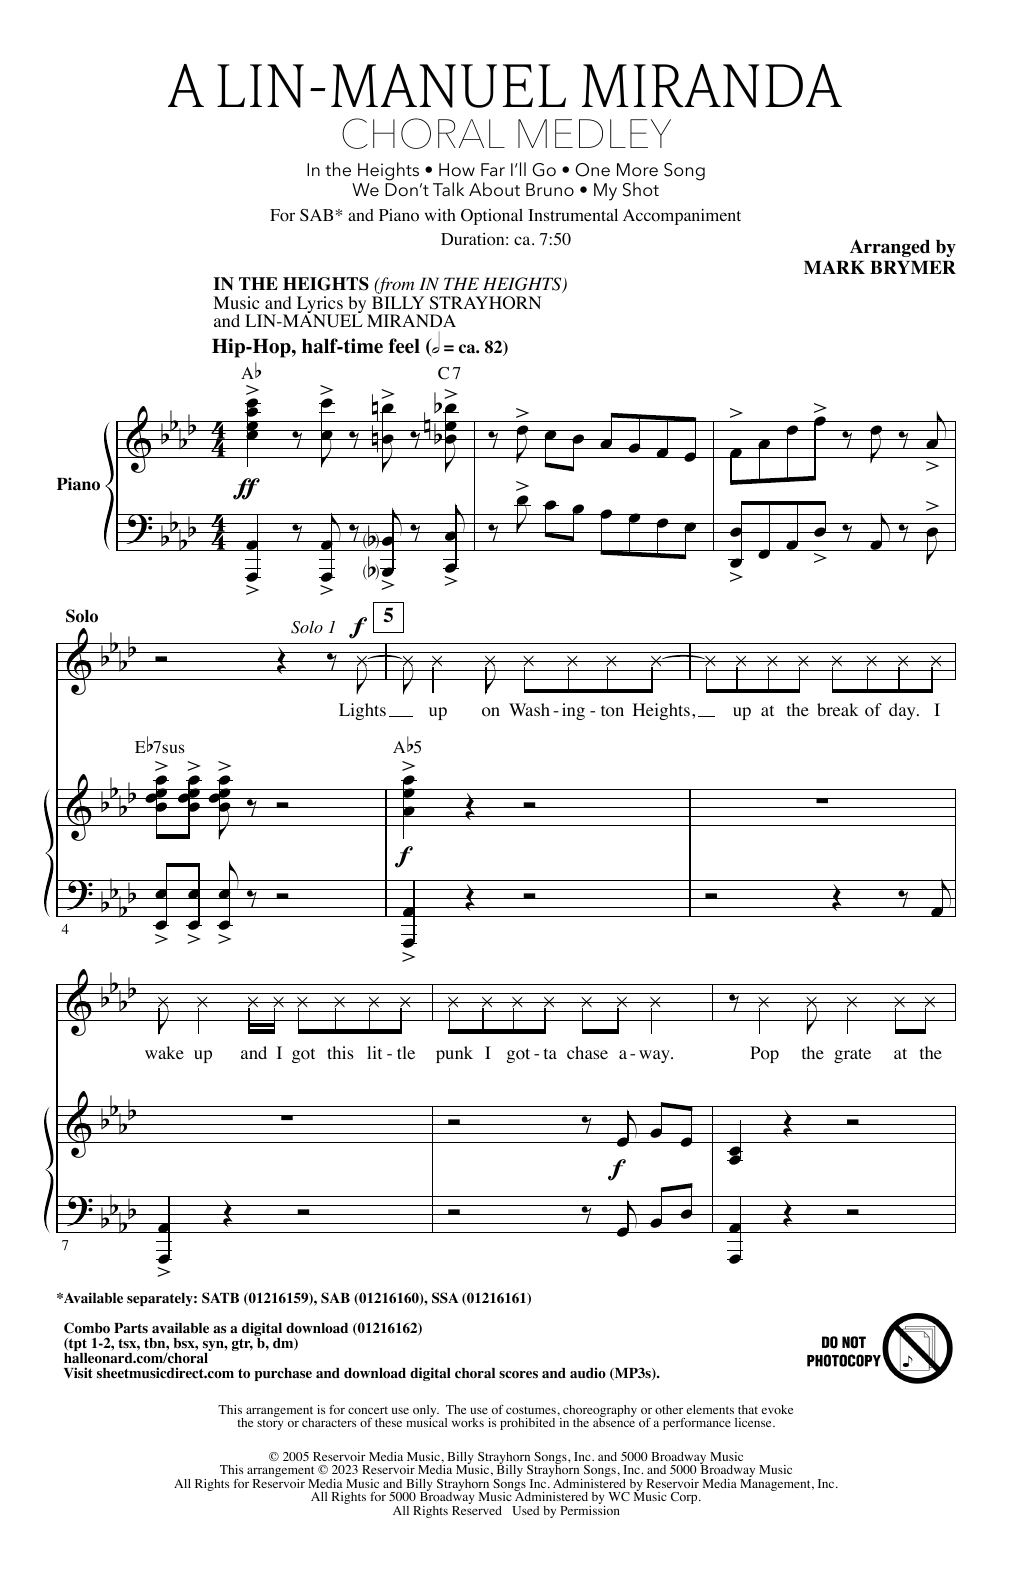 Lin-Manuel Miranda A Lin-Manuel Miranda Choral Medley (arr. Mark Brymer) Sheet Music Notes & Chords for SAB Choir - Download or Print PDF